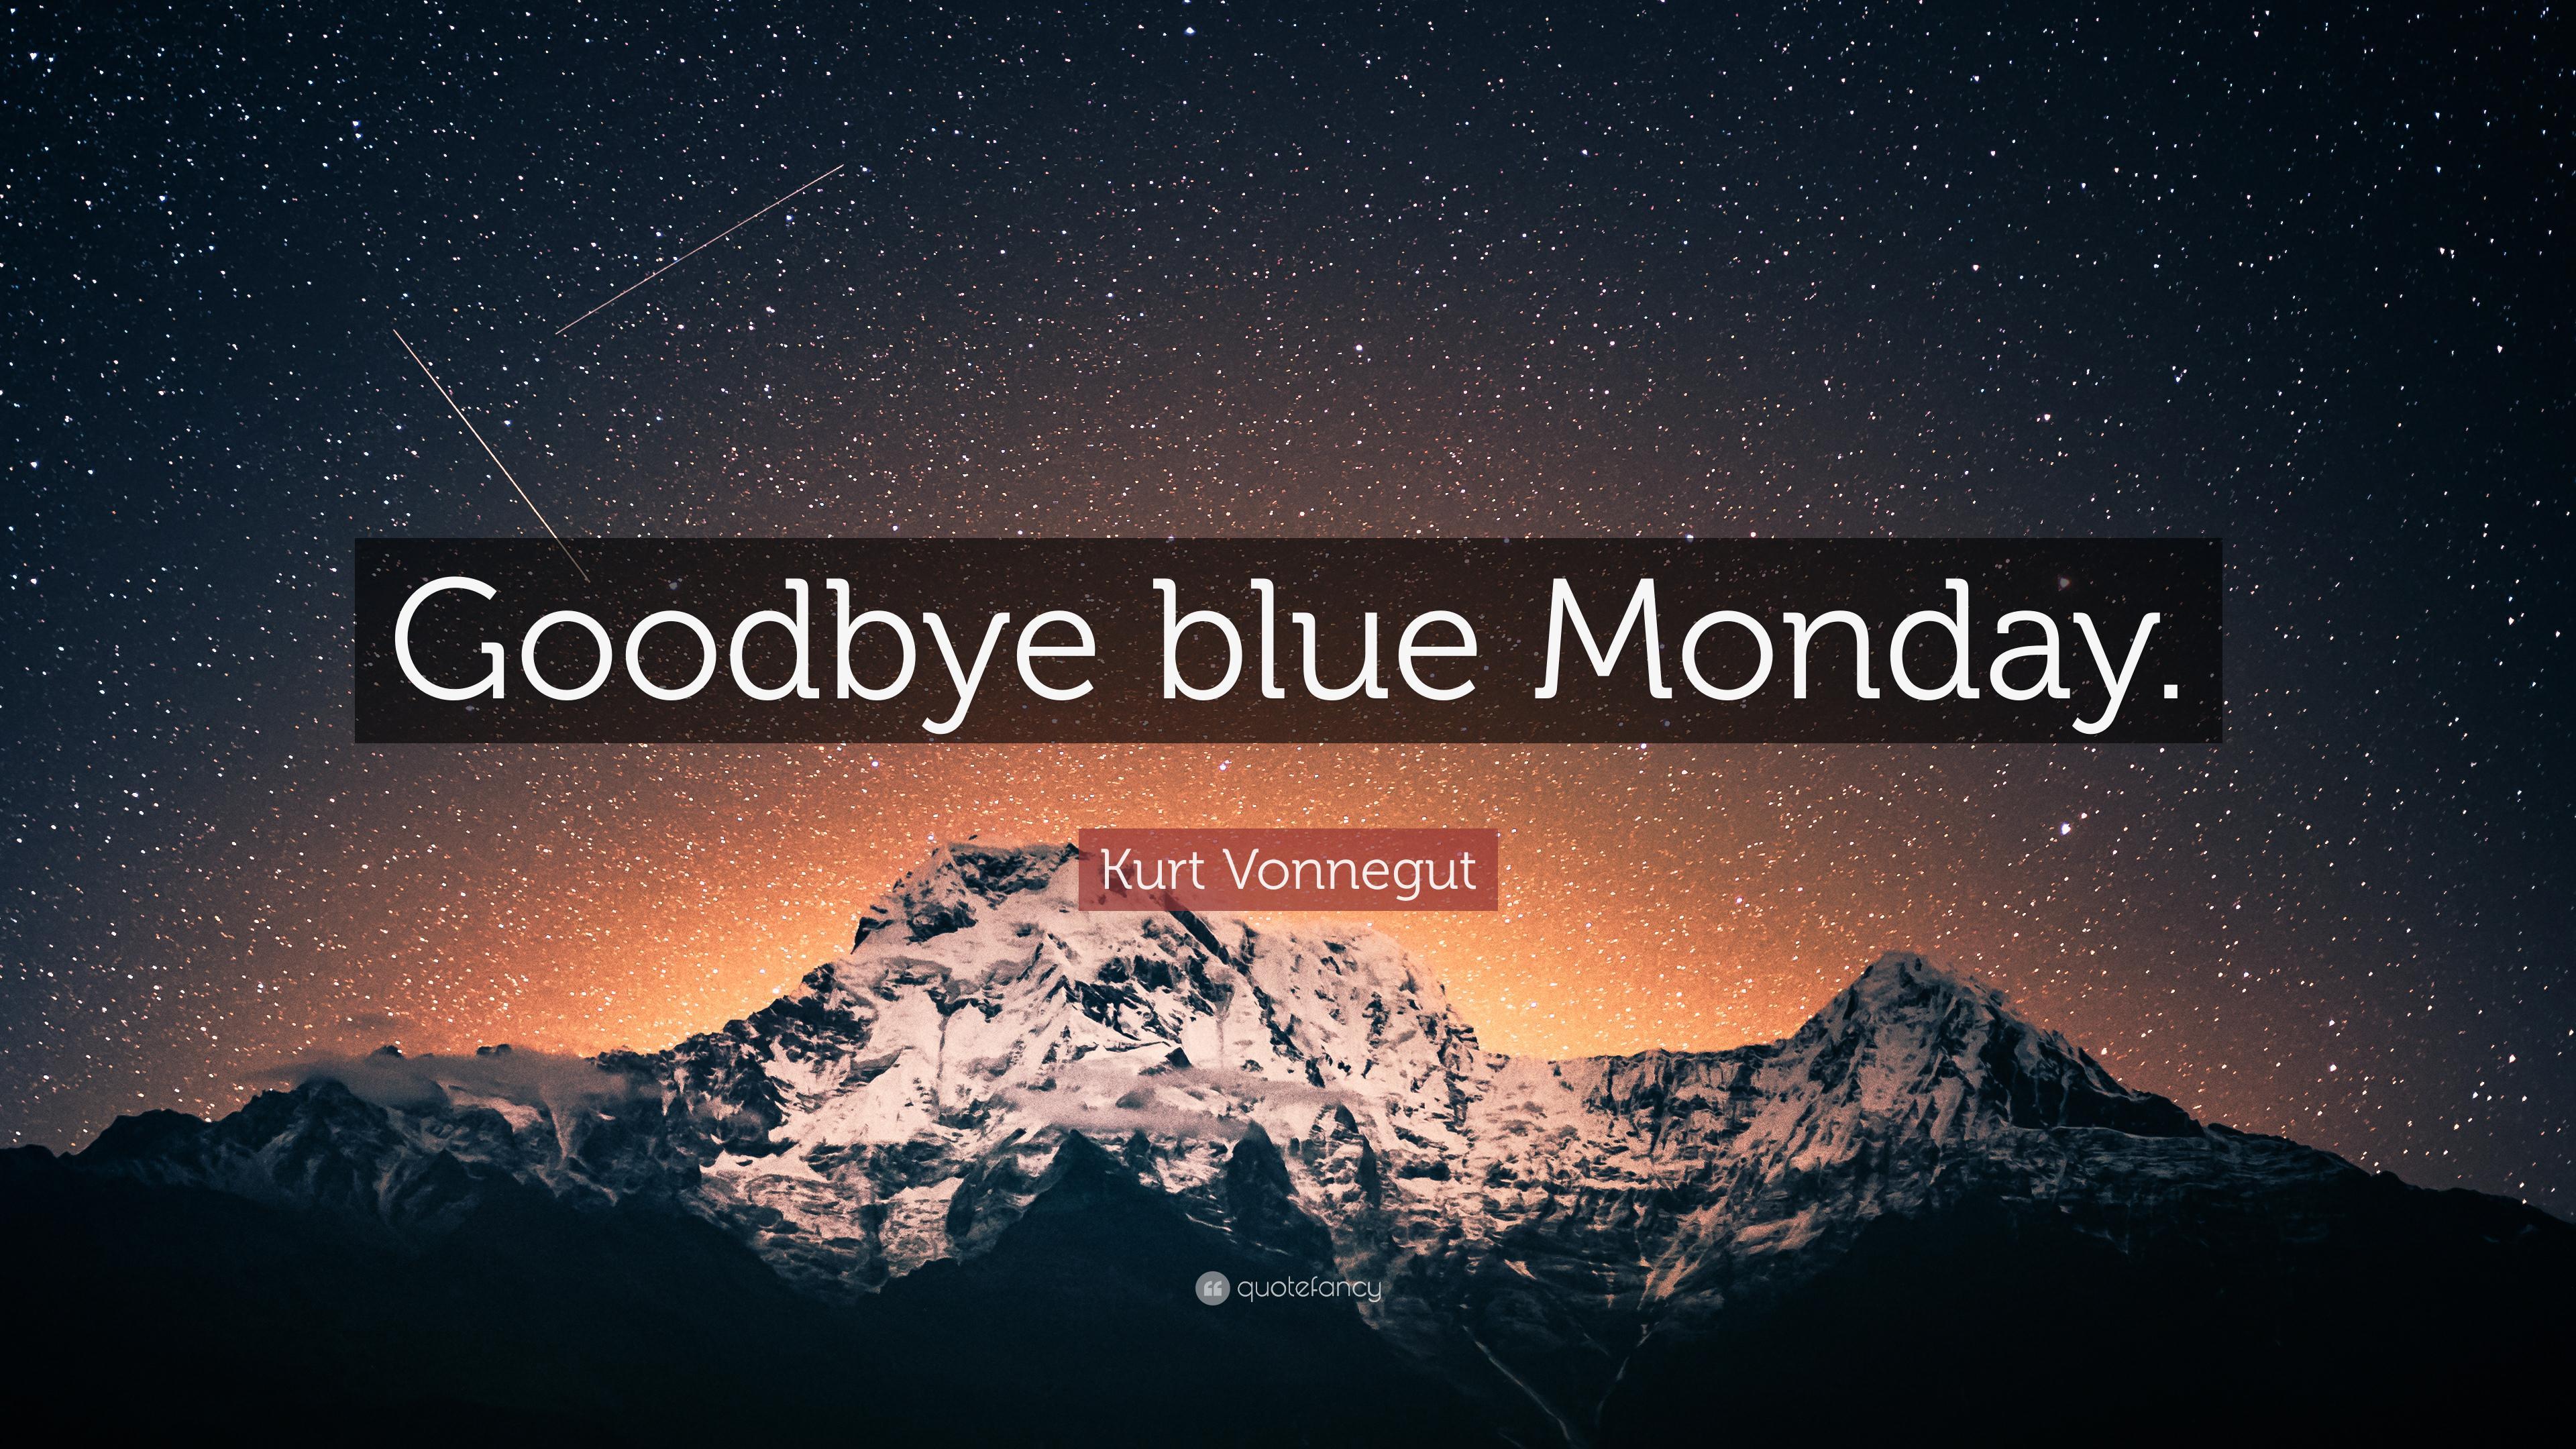 Kurt Vonnegut Quote: “Goodbye blue Monday.” 9 wallpaper